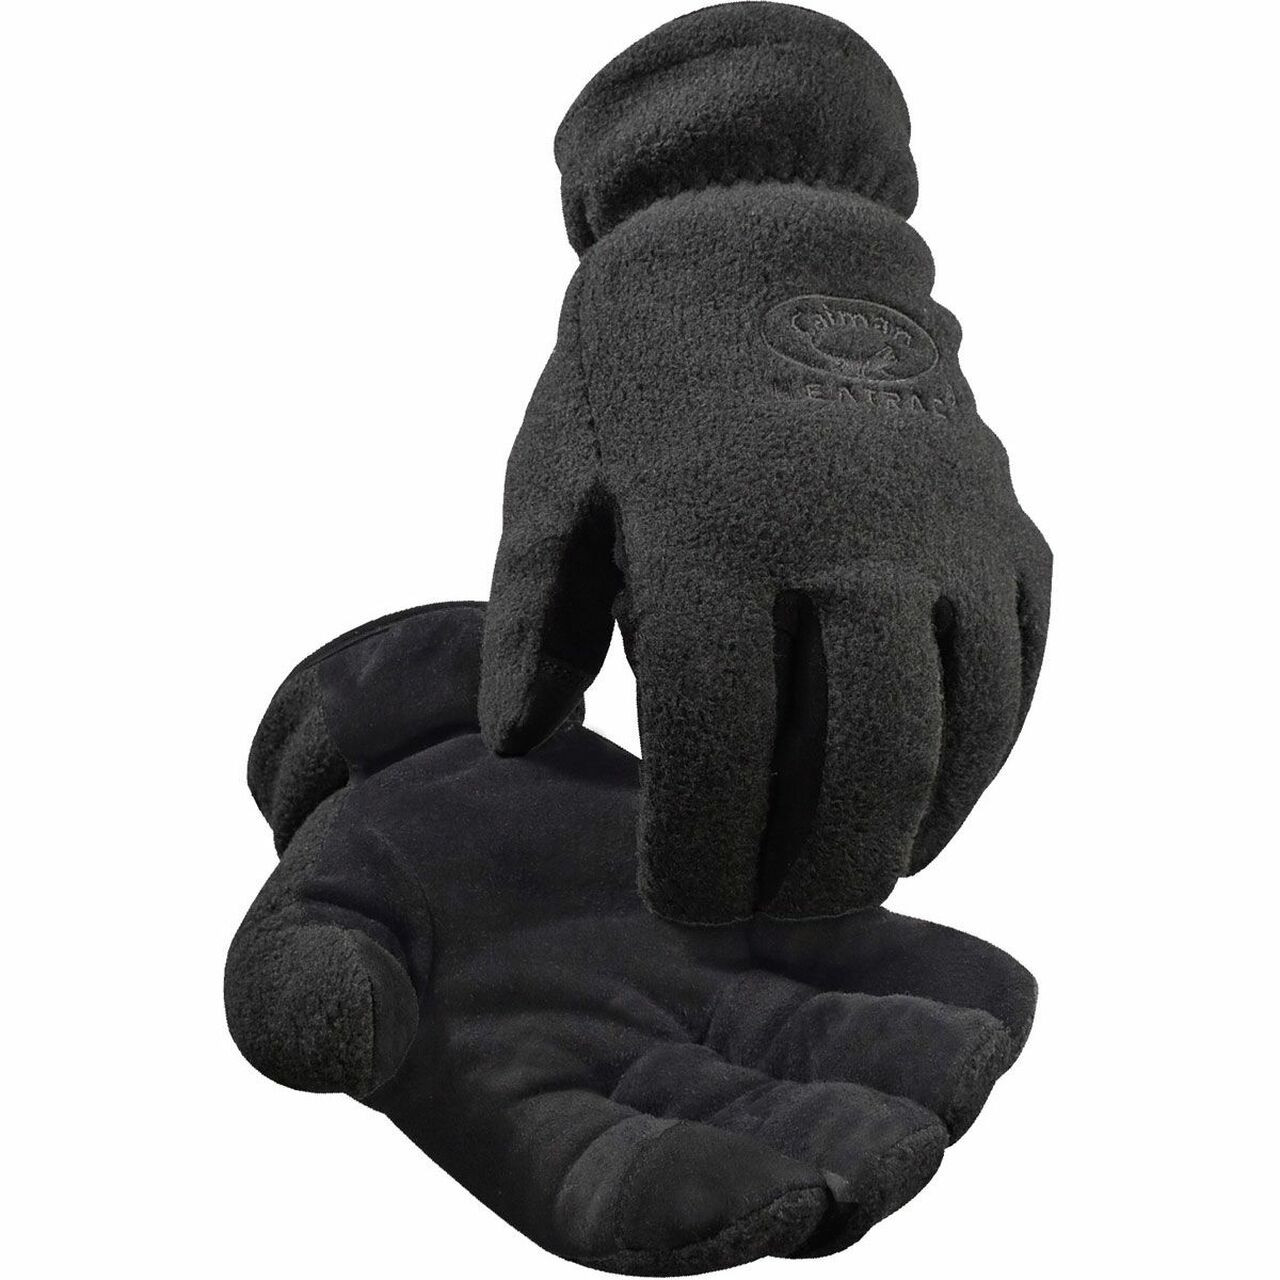 Caiman 2396 Heatrac® Insulated Deerskin Palm Gloves